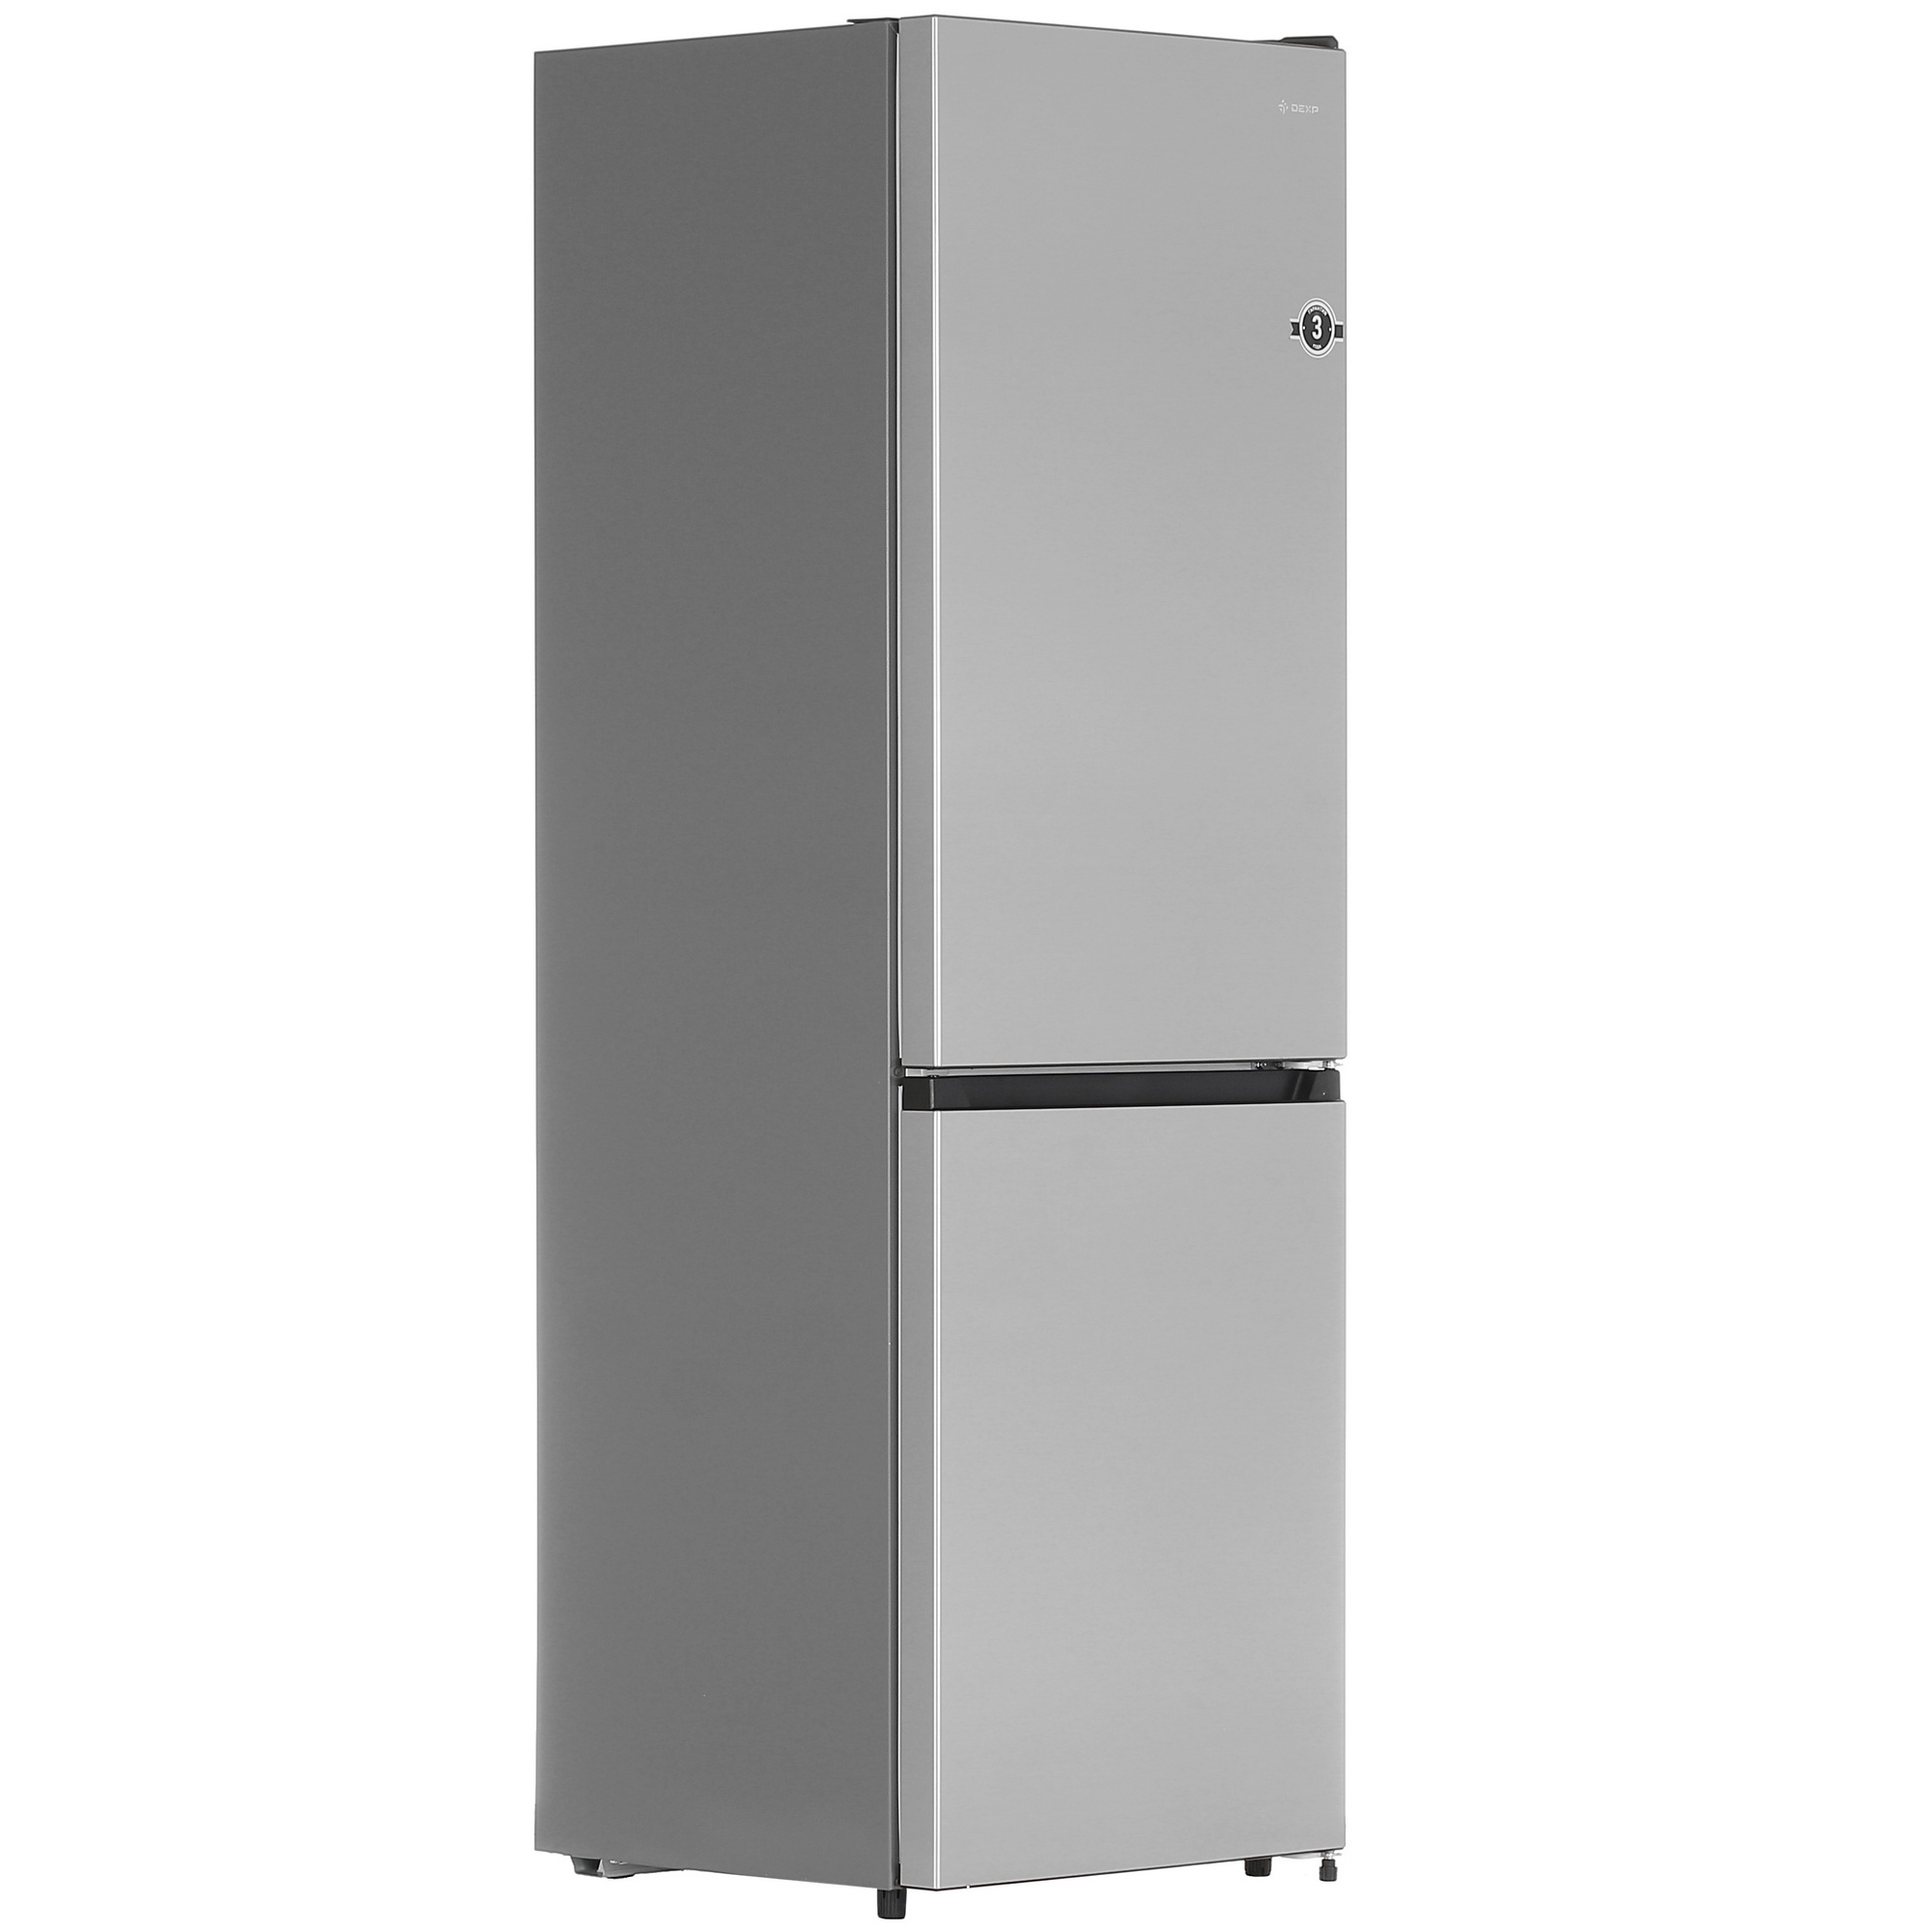 Холодильник с морозильником dexp rf. Холодильник DEXP RF-cn300 nhe/s серебристый. Gorenje RK 6192 ps4. Холодильник Beko RCSK 250m00. Gorenje nrk6201es4.